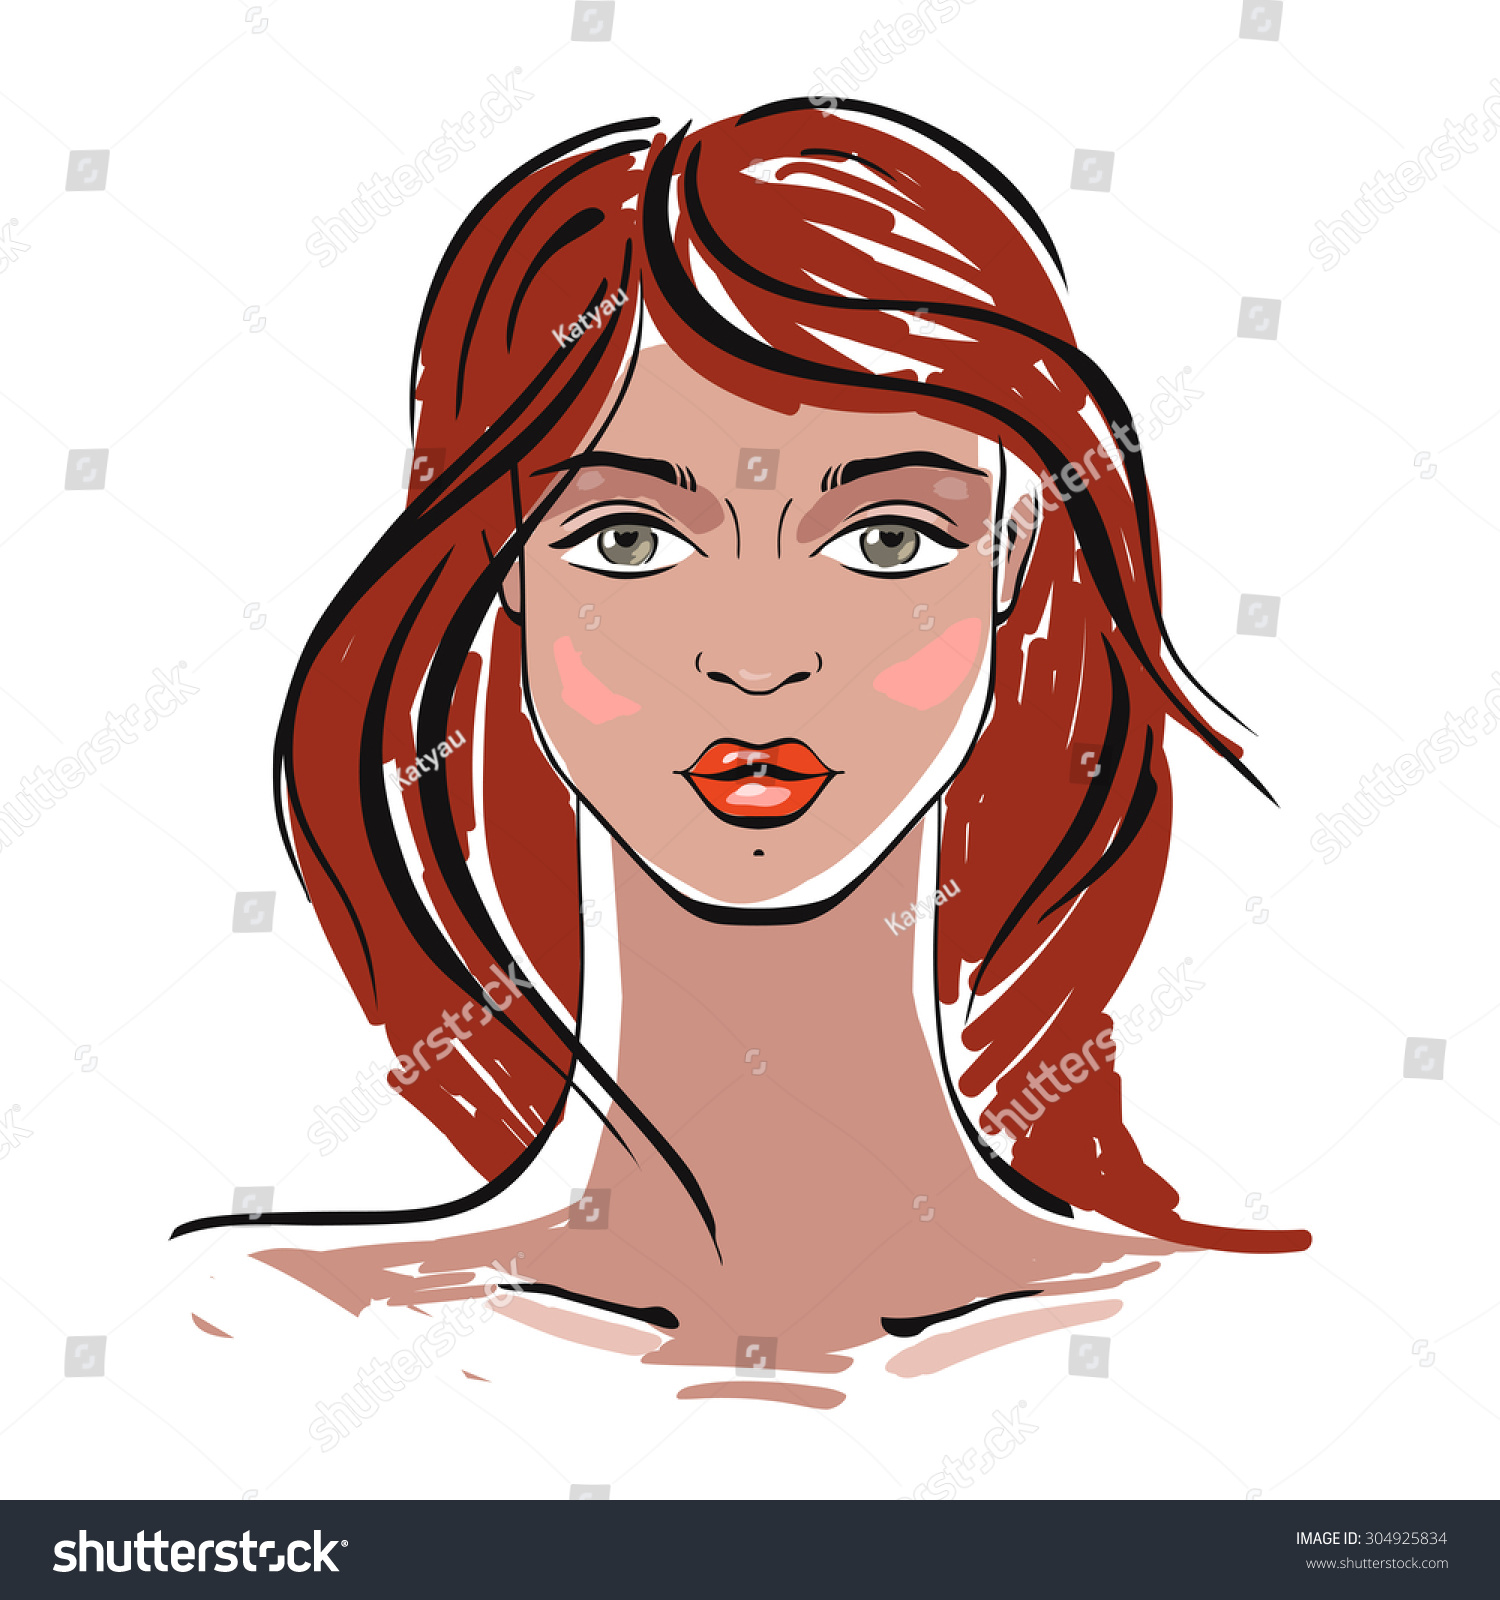 Beautiful Woman Portrait Hand Drawn Fashion Stock Vector Royalty Free 304925834 Shutterstock 0083